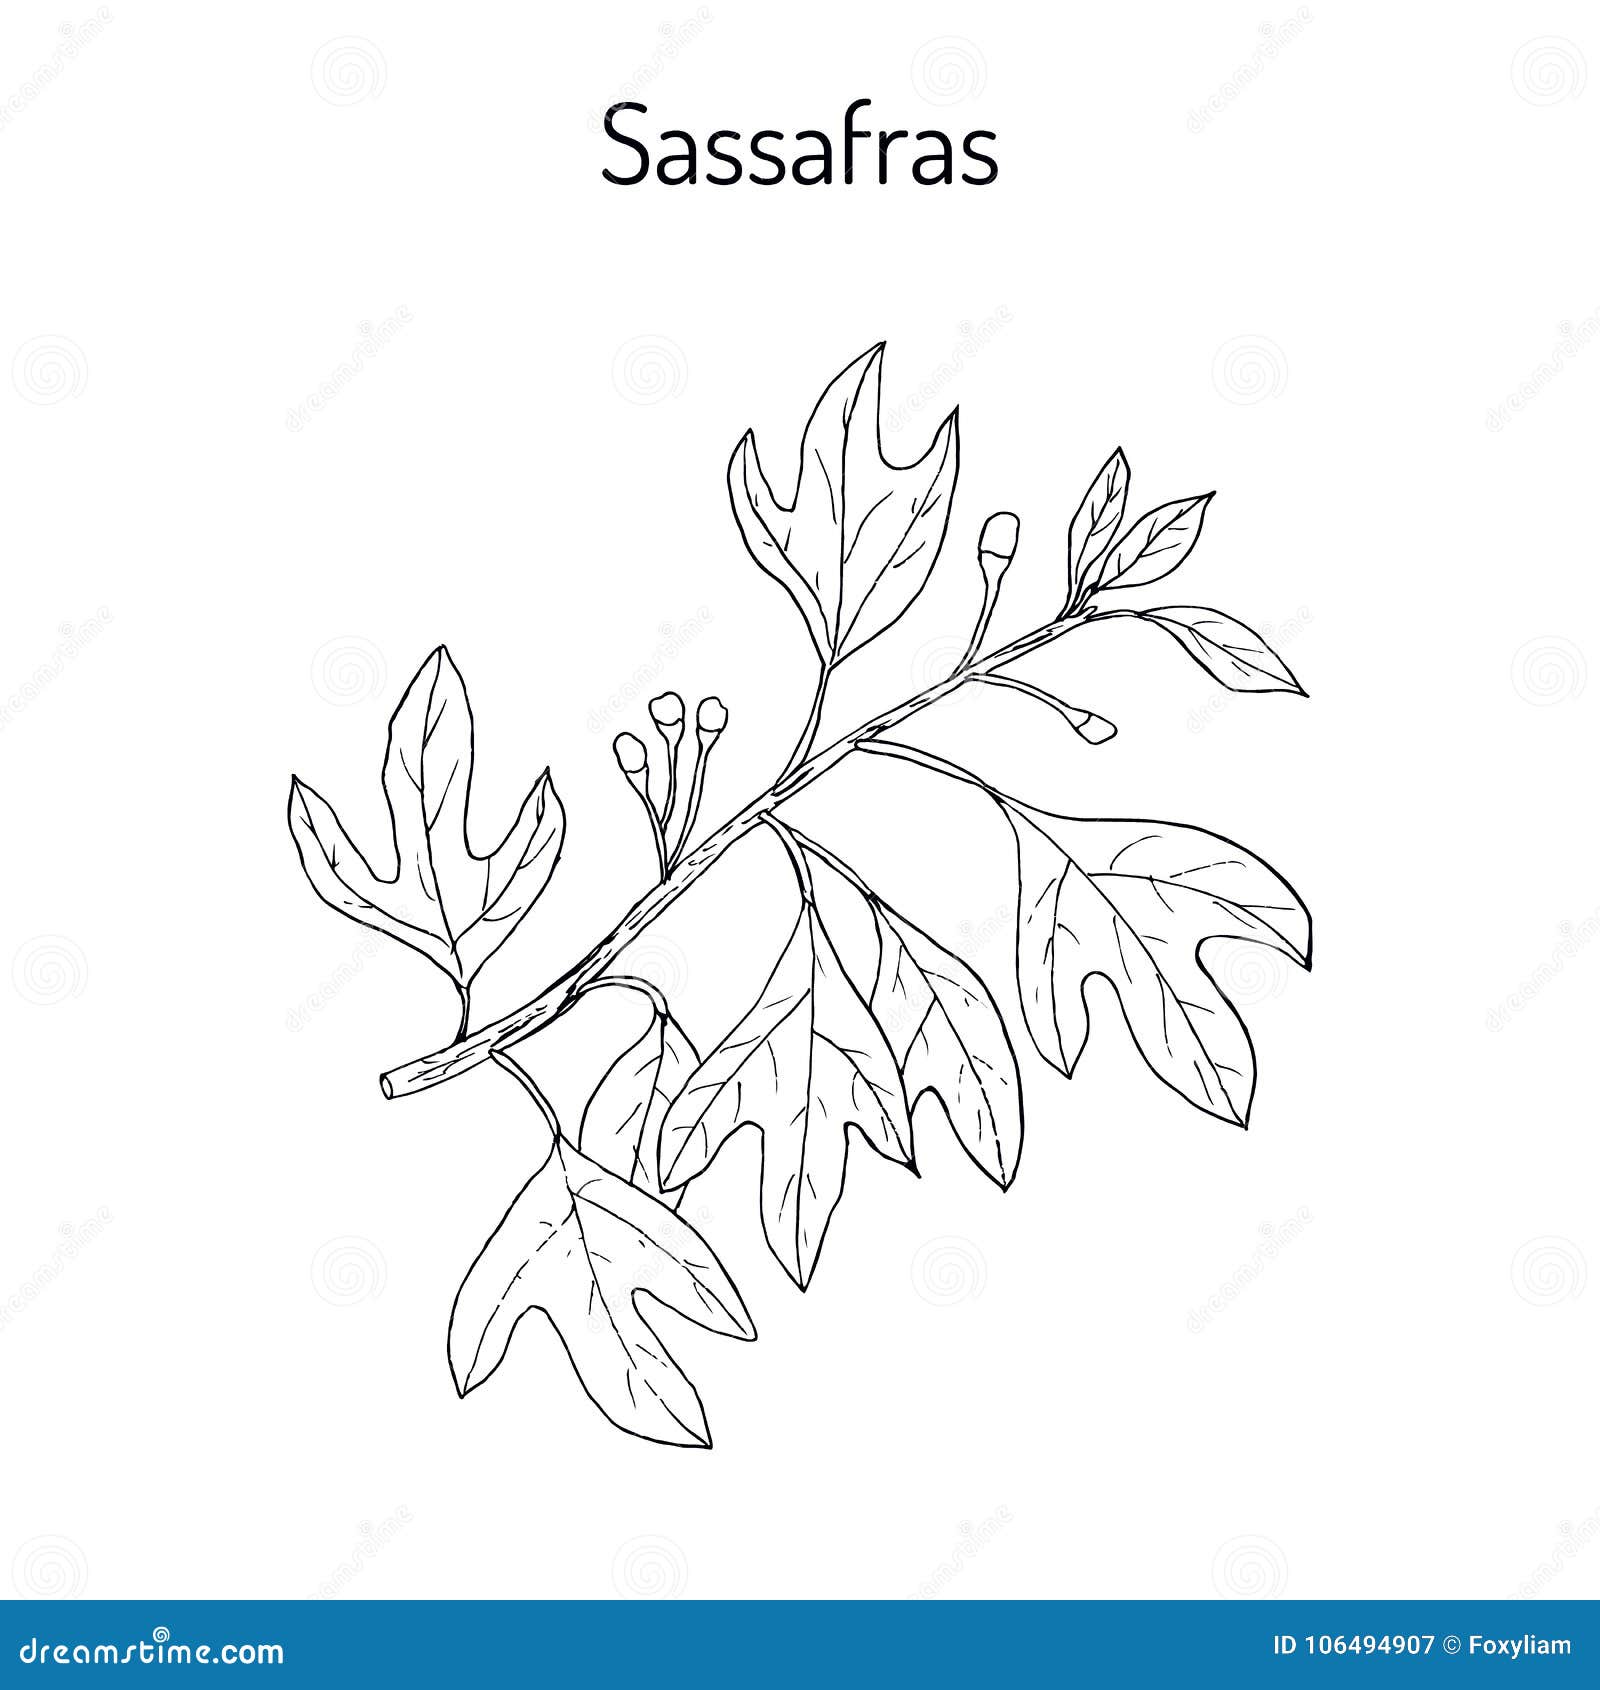 Sassafras Albidum Medicinal Plant Stock Vector - Illustration of